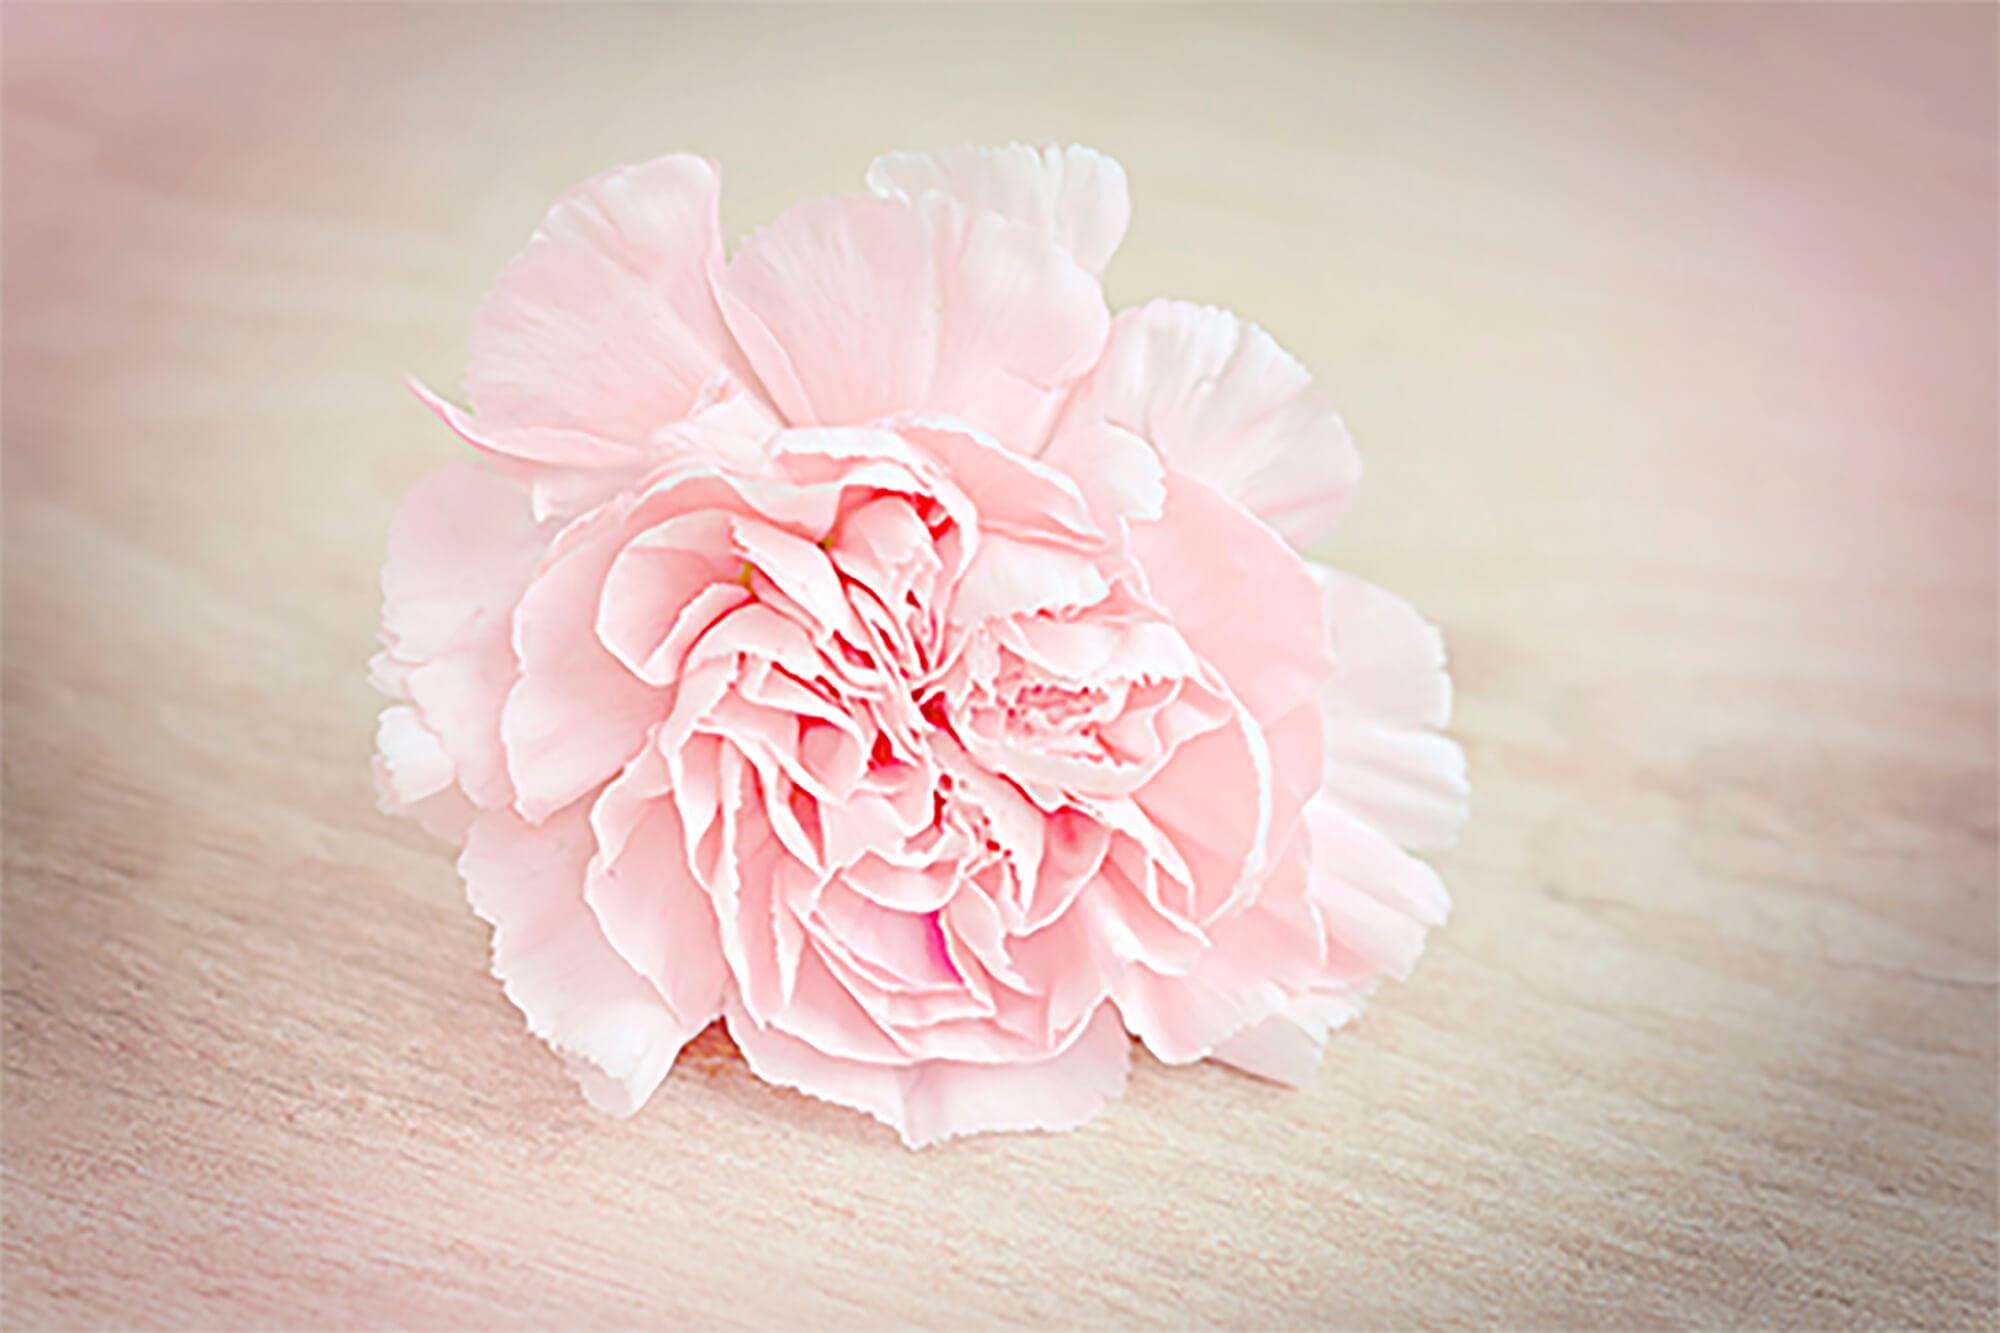 Pale pink carnation flower